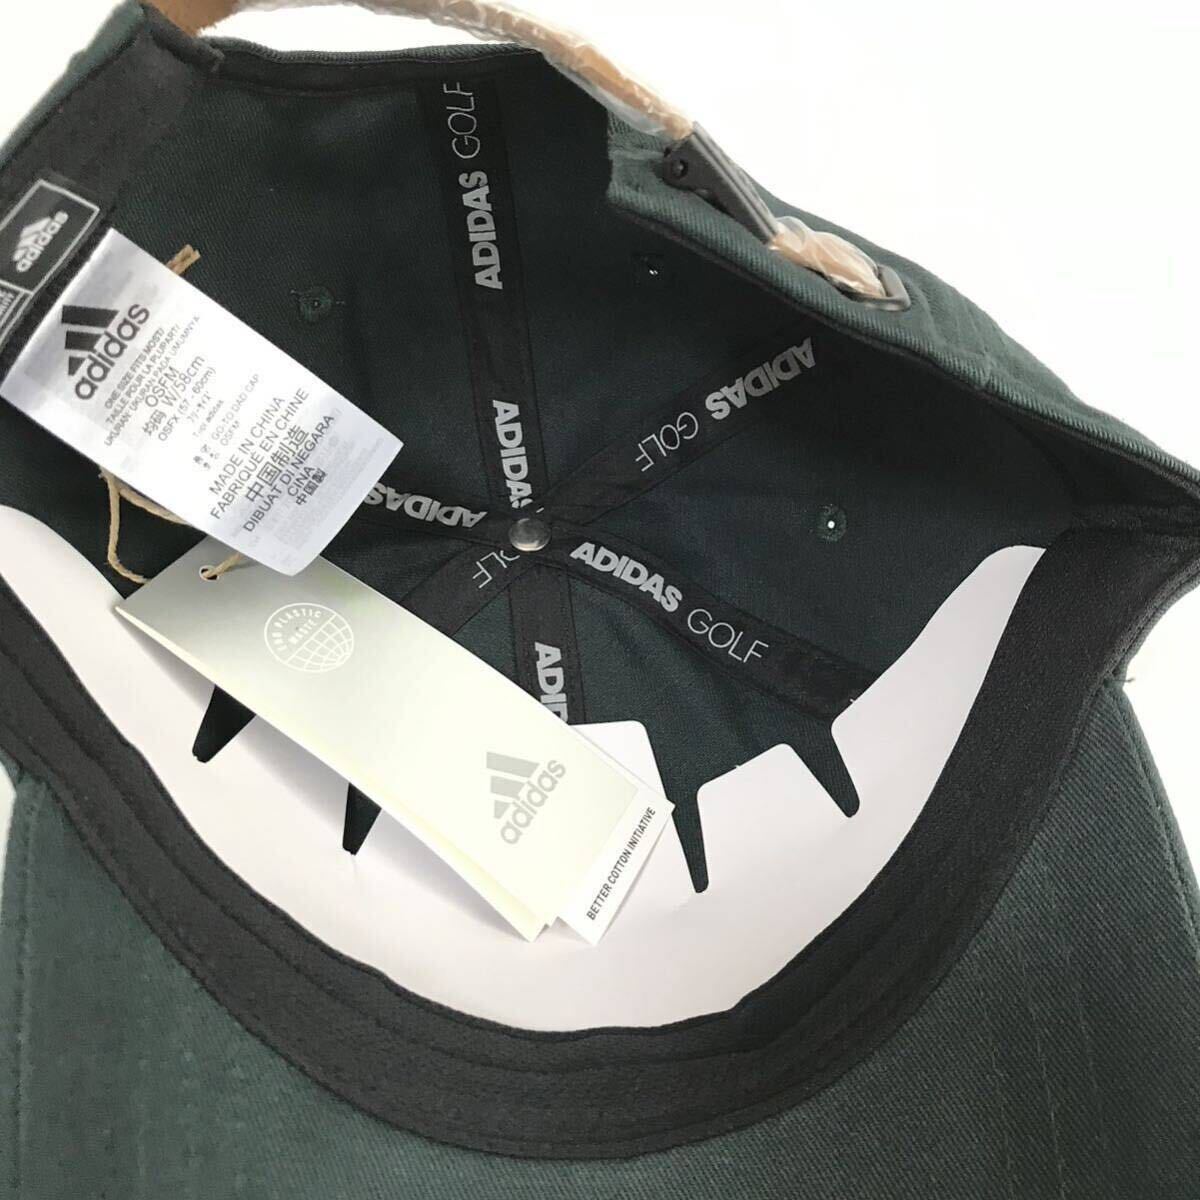 〓K085新品 【フリーサイズ】黒グリーン アディダス ゴルフ adidas GOLF キャップ 帽子 バーサタイル コットンキャップ OSFX_画像2